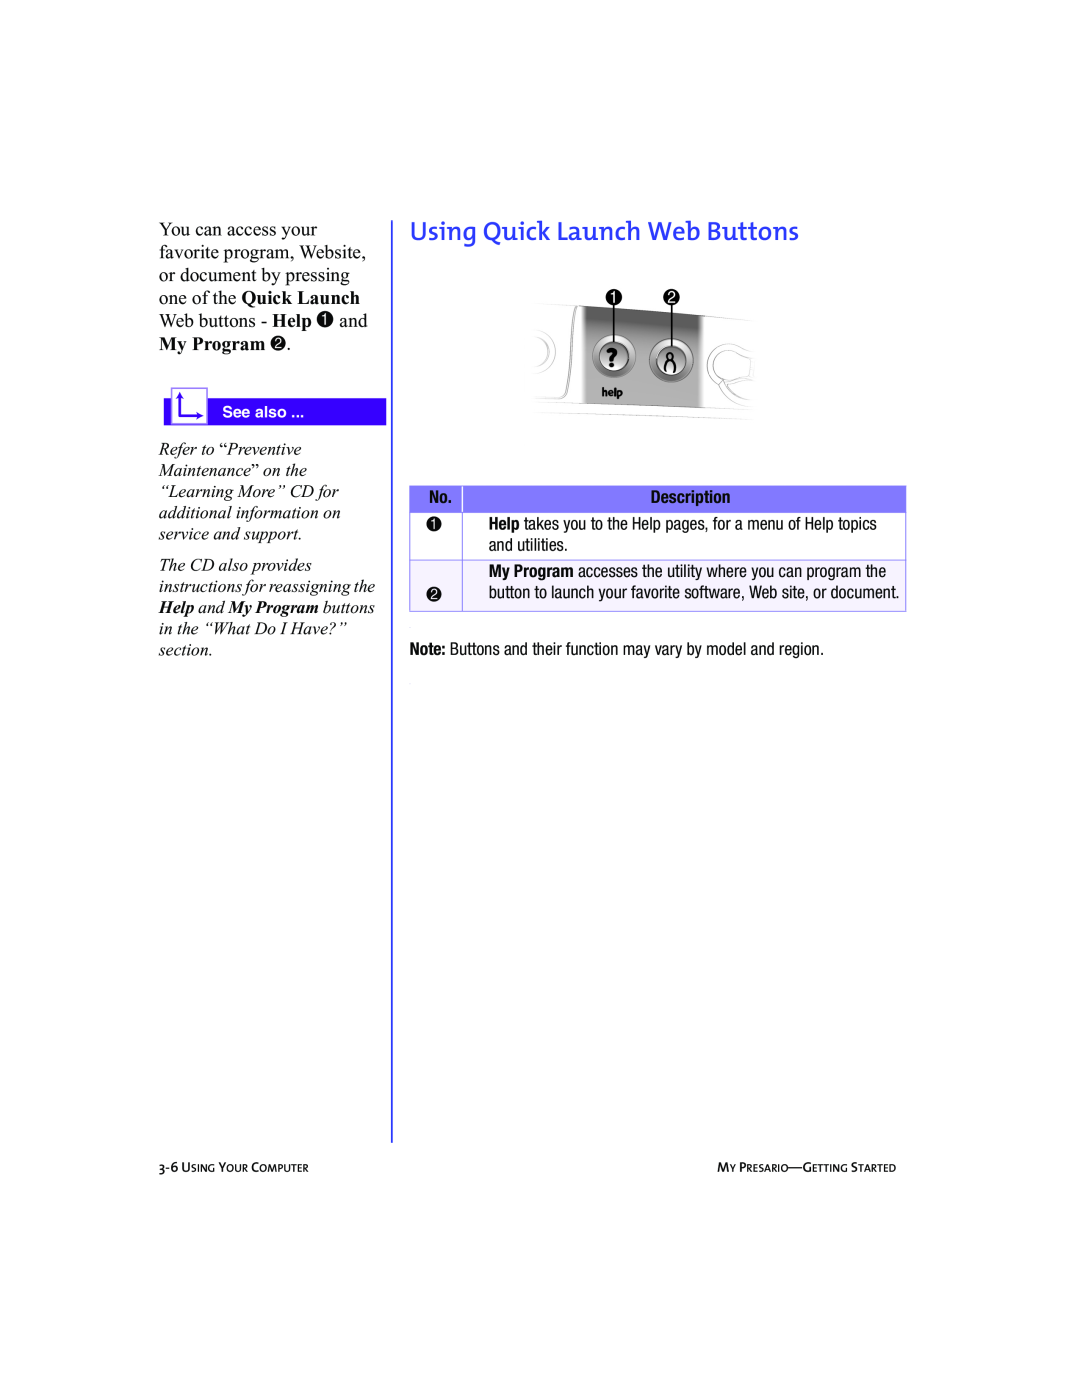 Compaq 5BW474 manual Using Quick Launch Web Buttons, My Program, Description 